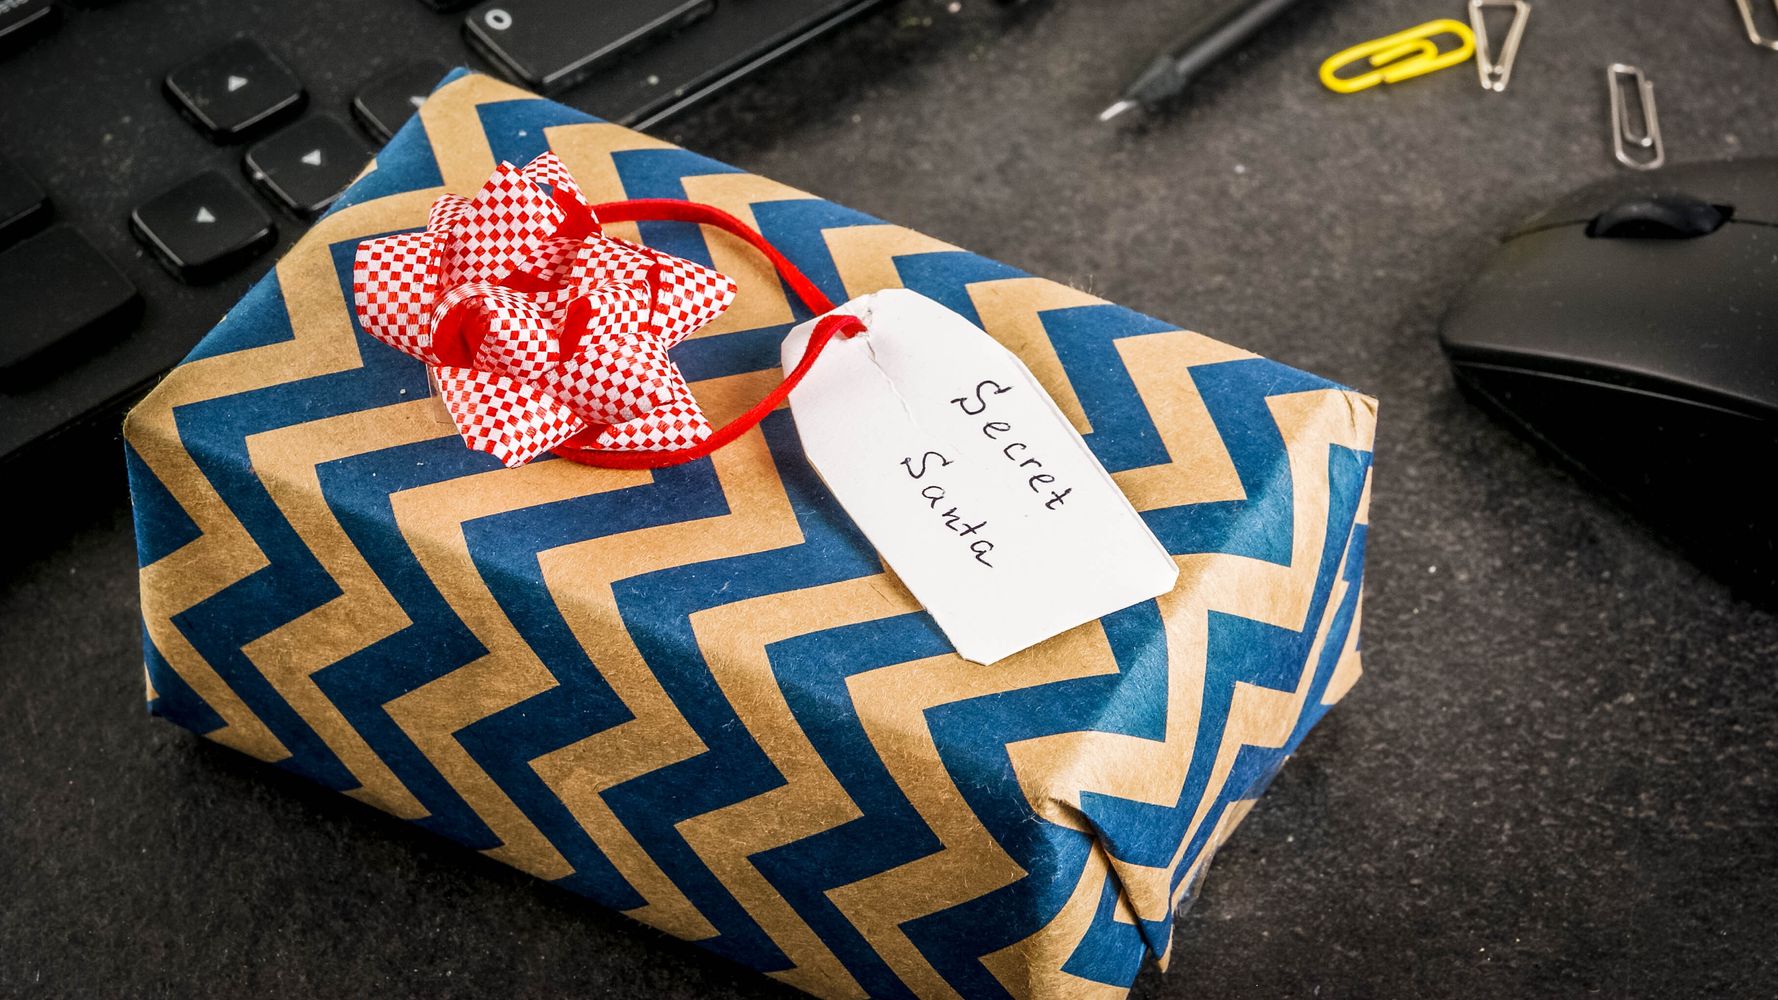 How To Do A Virtual Secret Santa Gift Exchange That's Actually Fun This Year